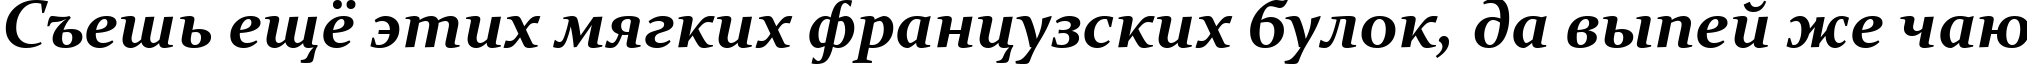 Пример написания шрифтом Constantia Bold Italic текста на русском